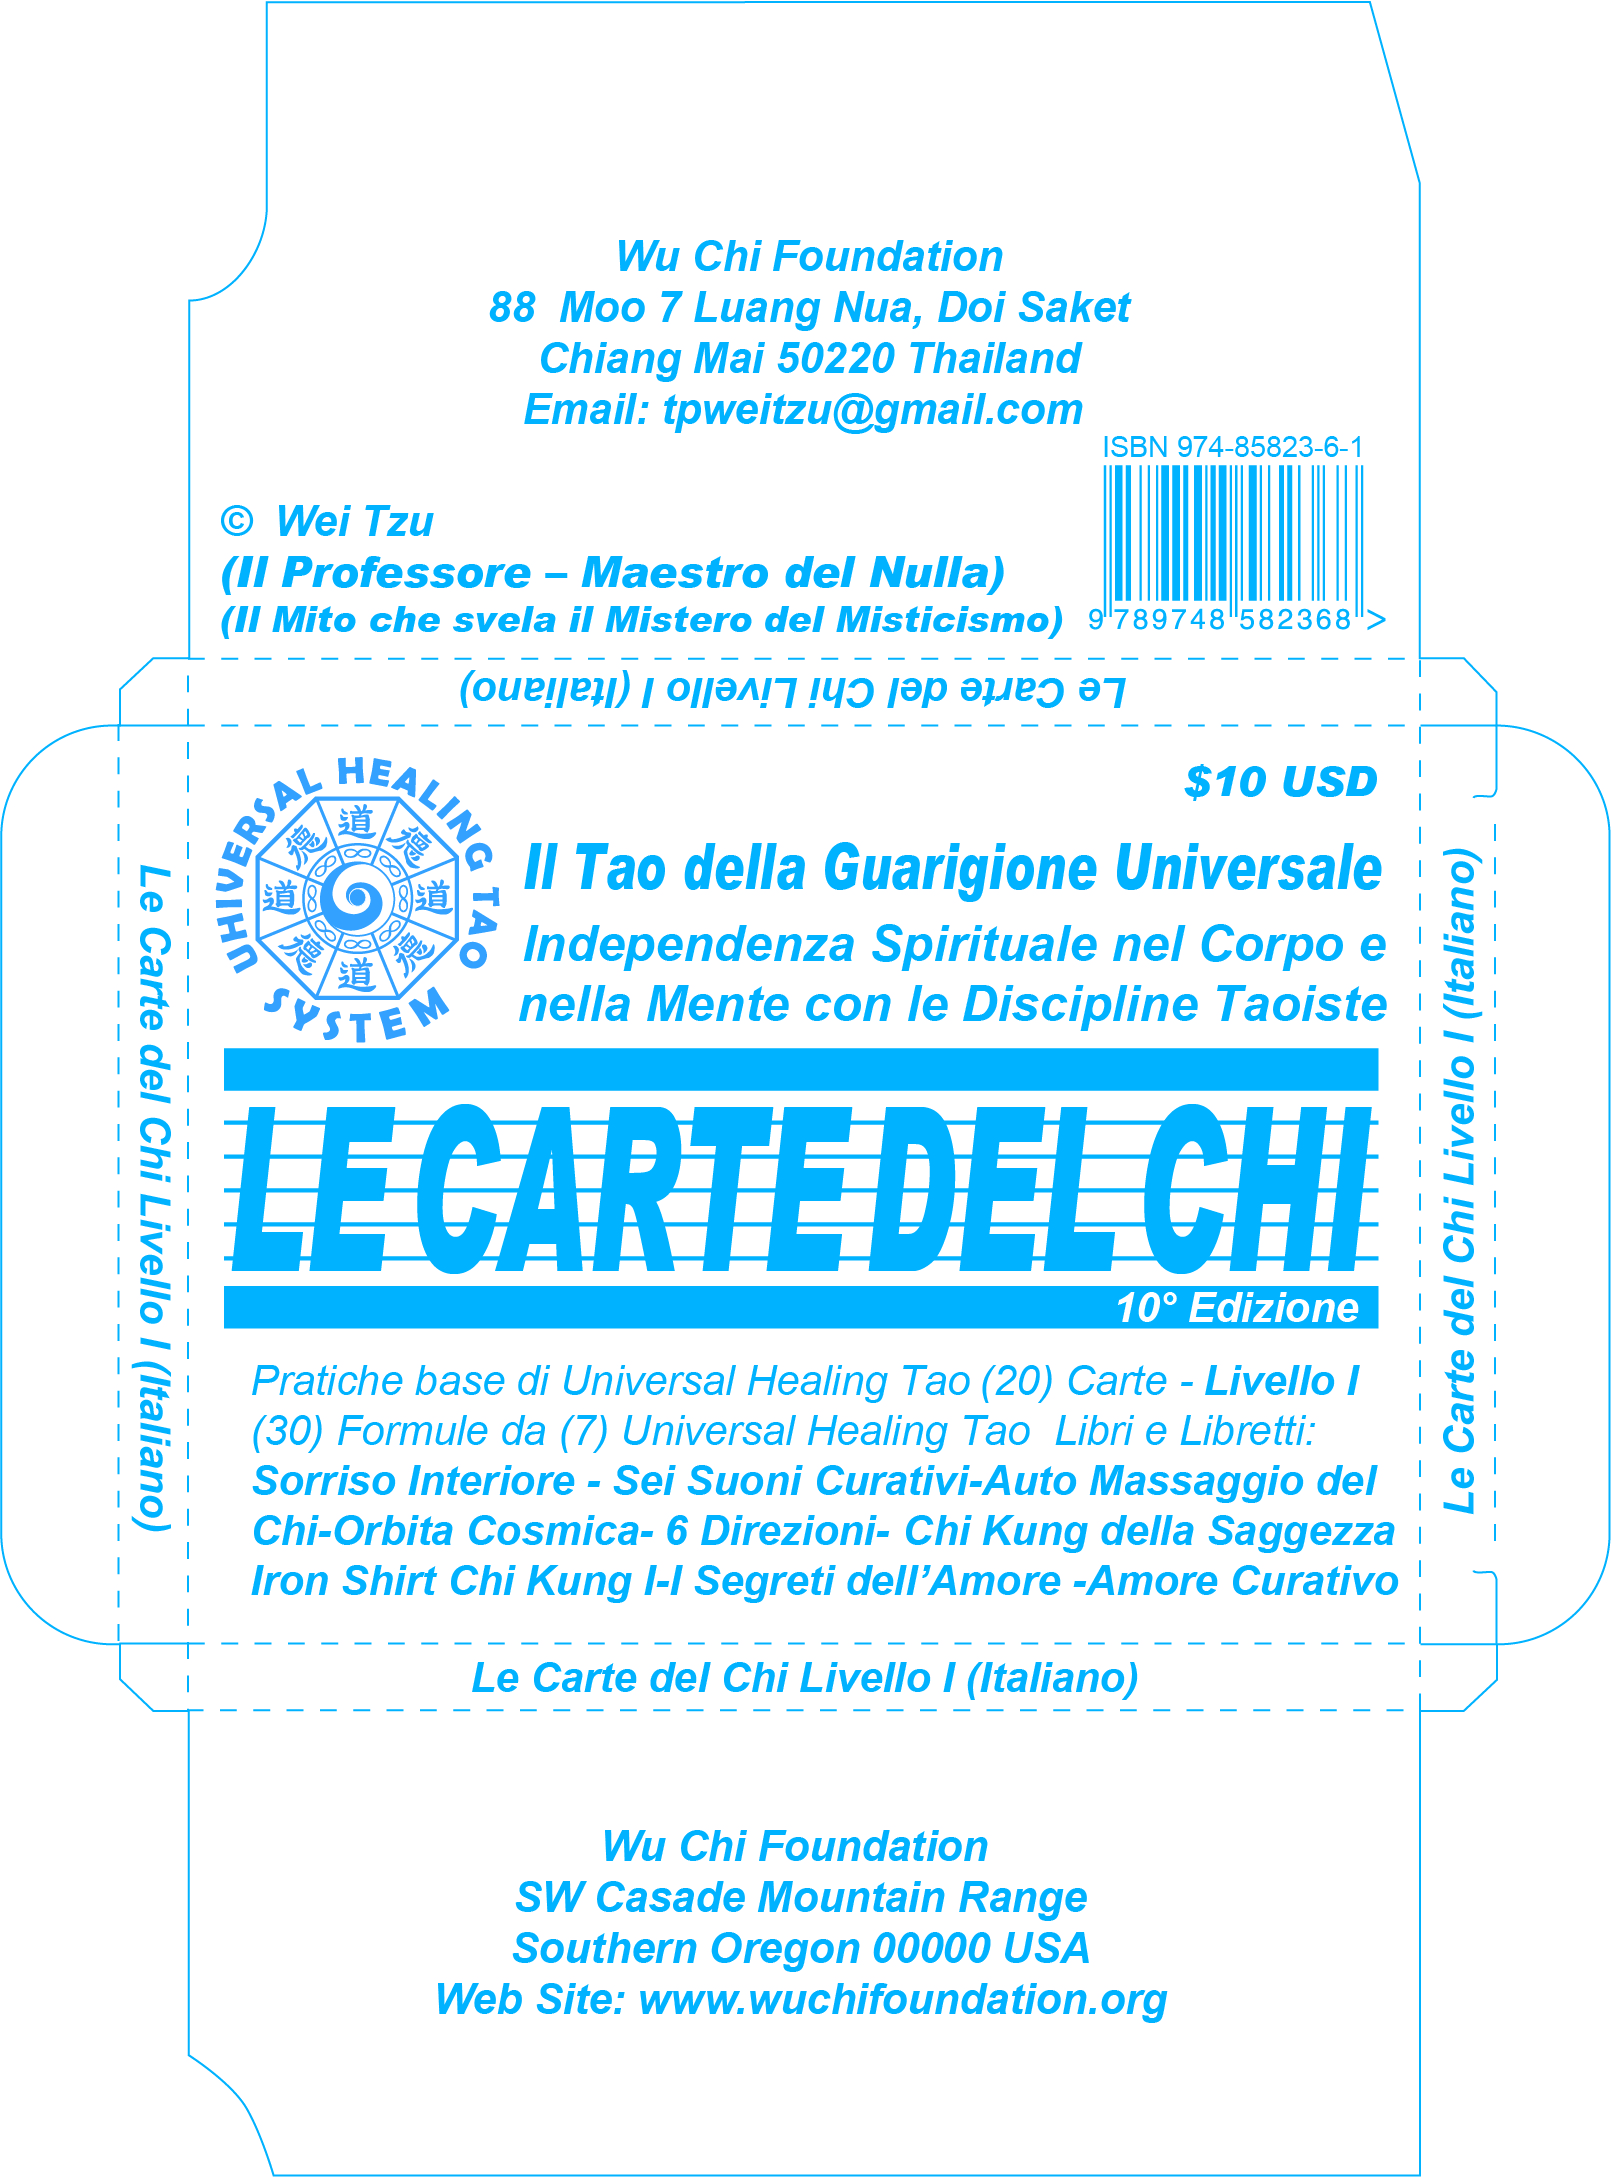 Italian Chi Cards - Level I (10 Edition)